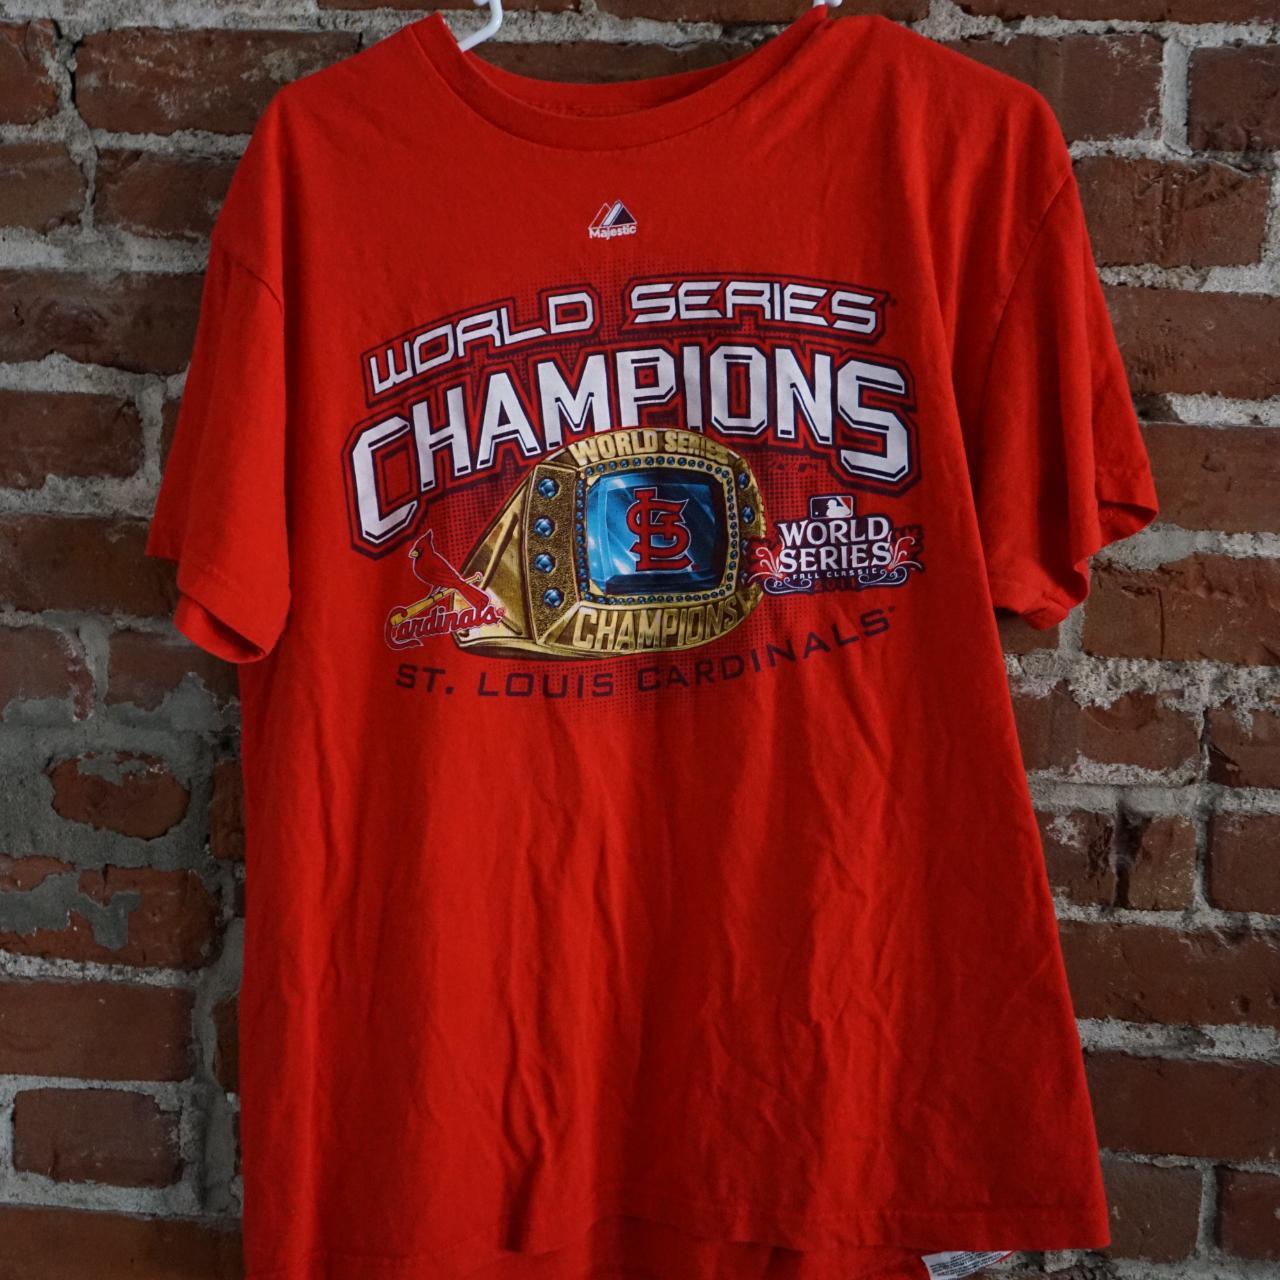 St. louis Cardinals World Series Champions 2011 T Shirt Size L